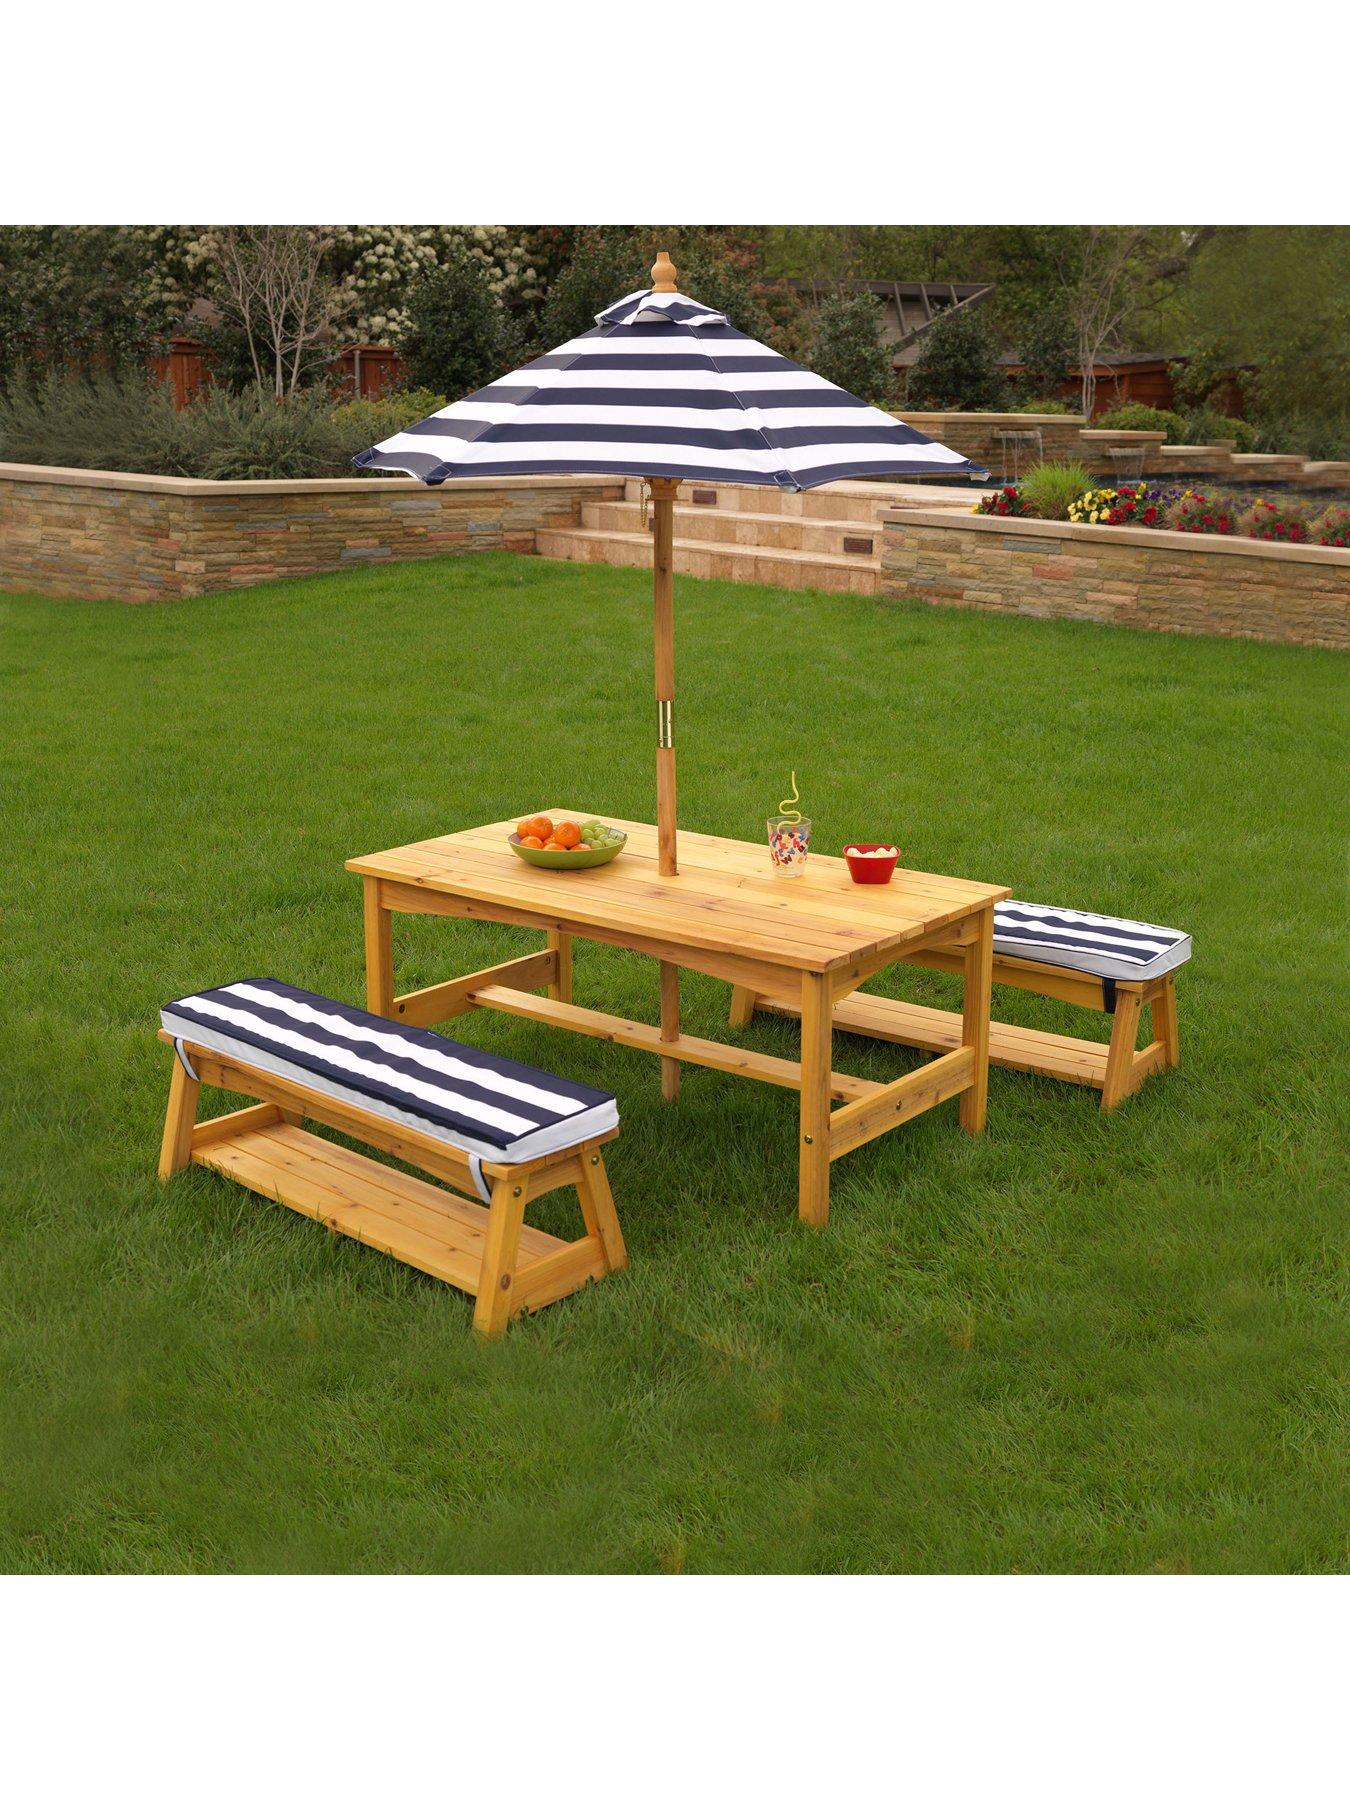 Kidkraft Outdoor Picnic Table  Bench Set With Cushions  Umbrella